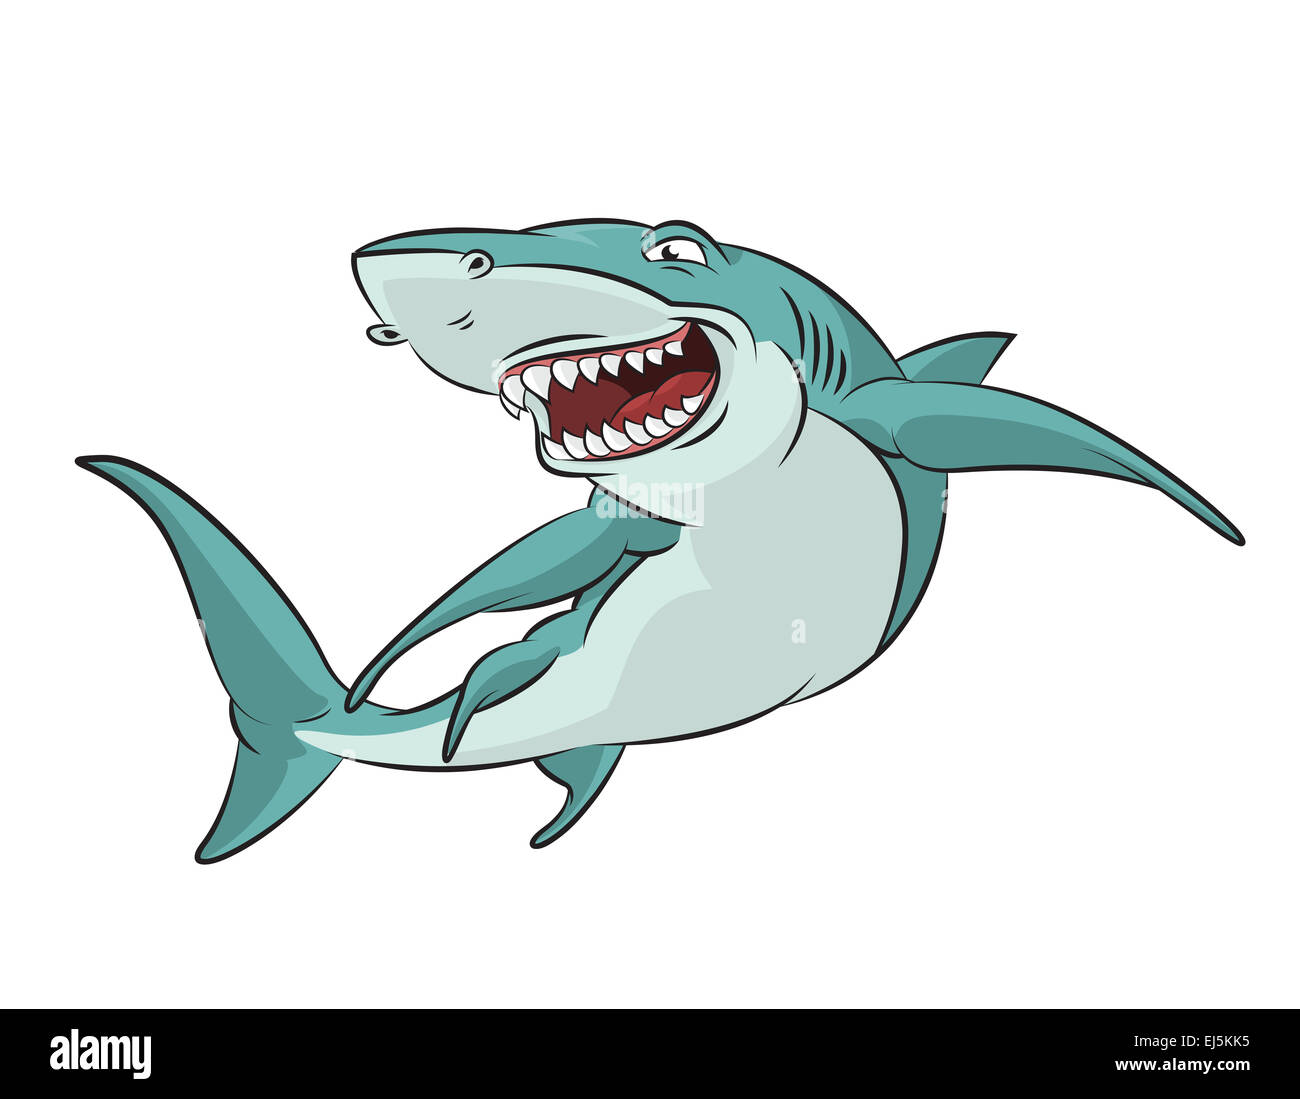 Vector image of funny cartoon smiling shark Stock Photo - Alamy